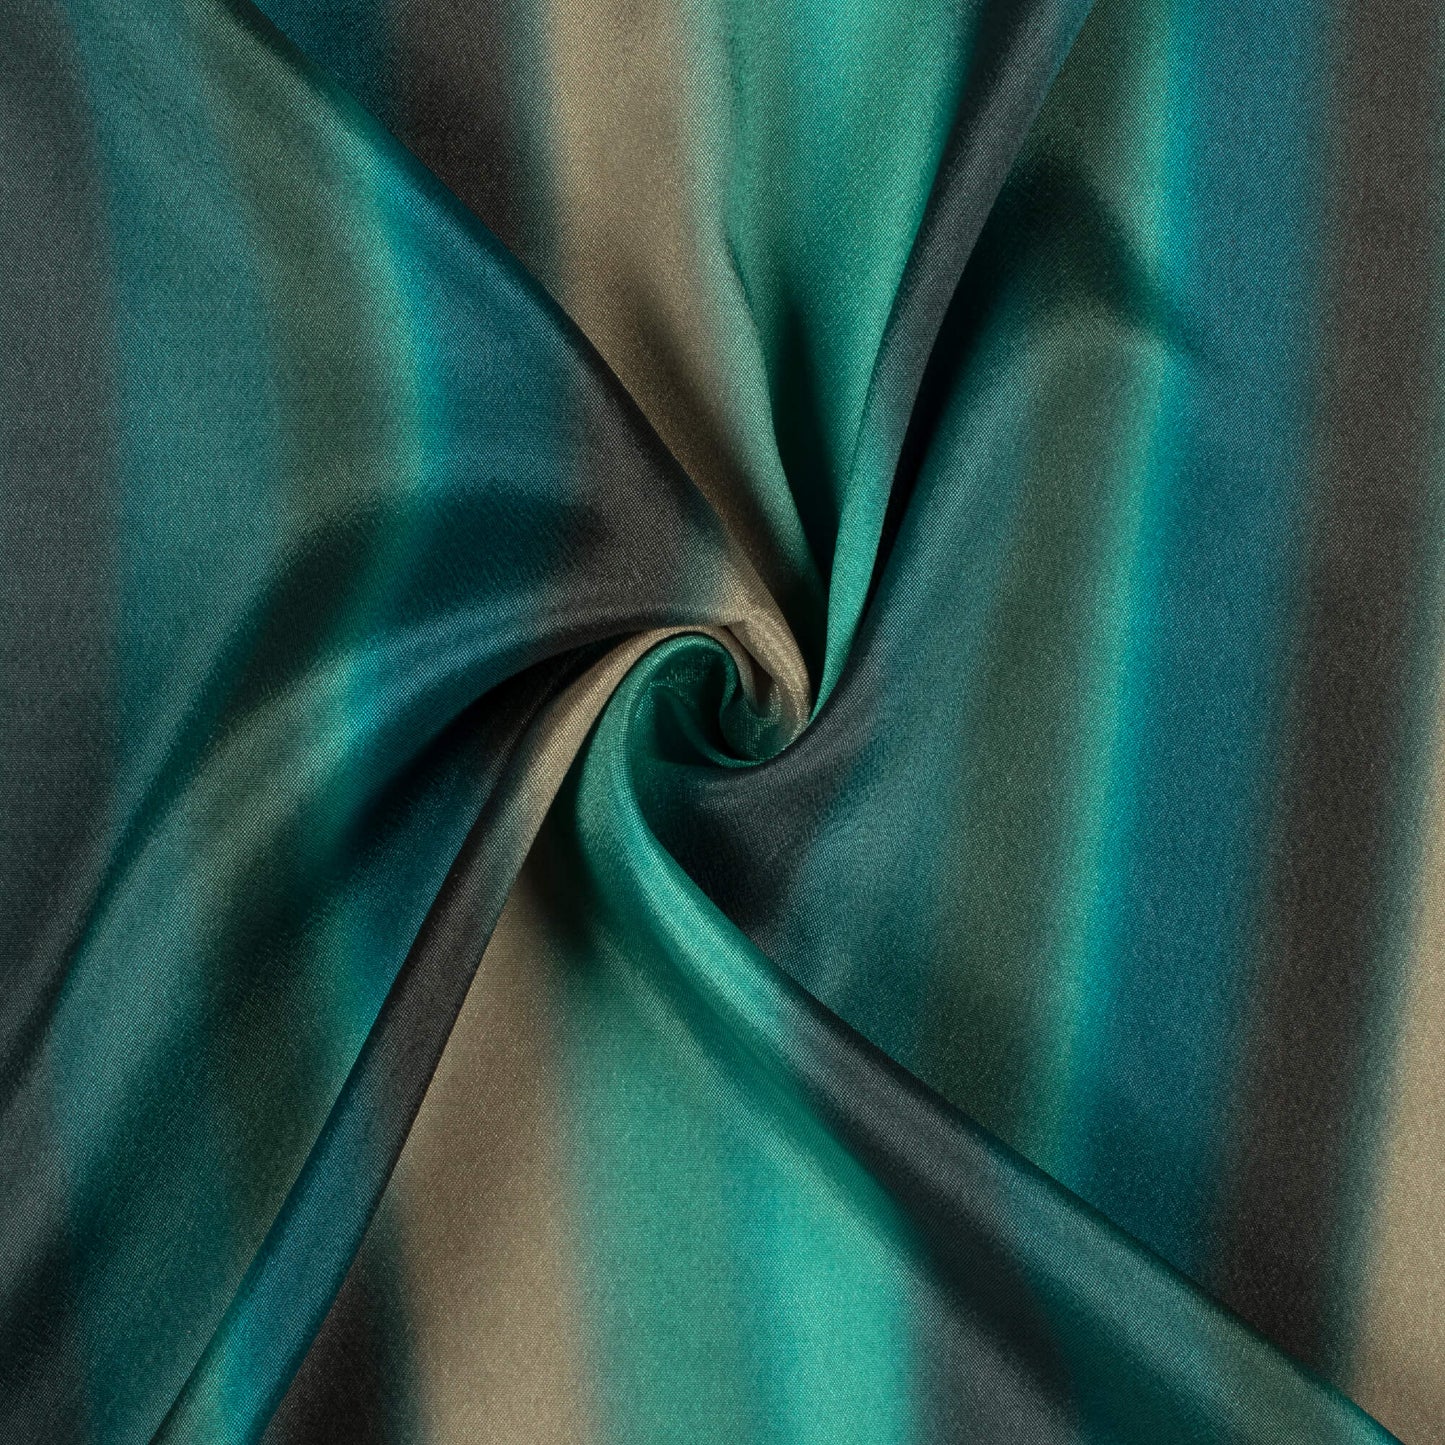 Peacock Blue And Paris Green Stripes Pattern Digital Print Crepe Silk Fabric